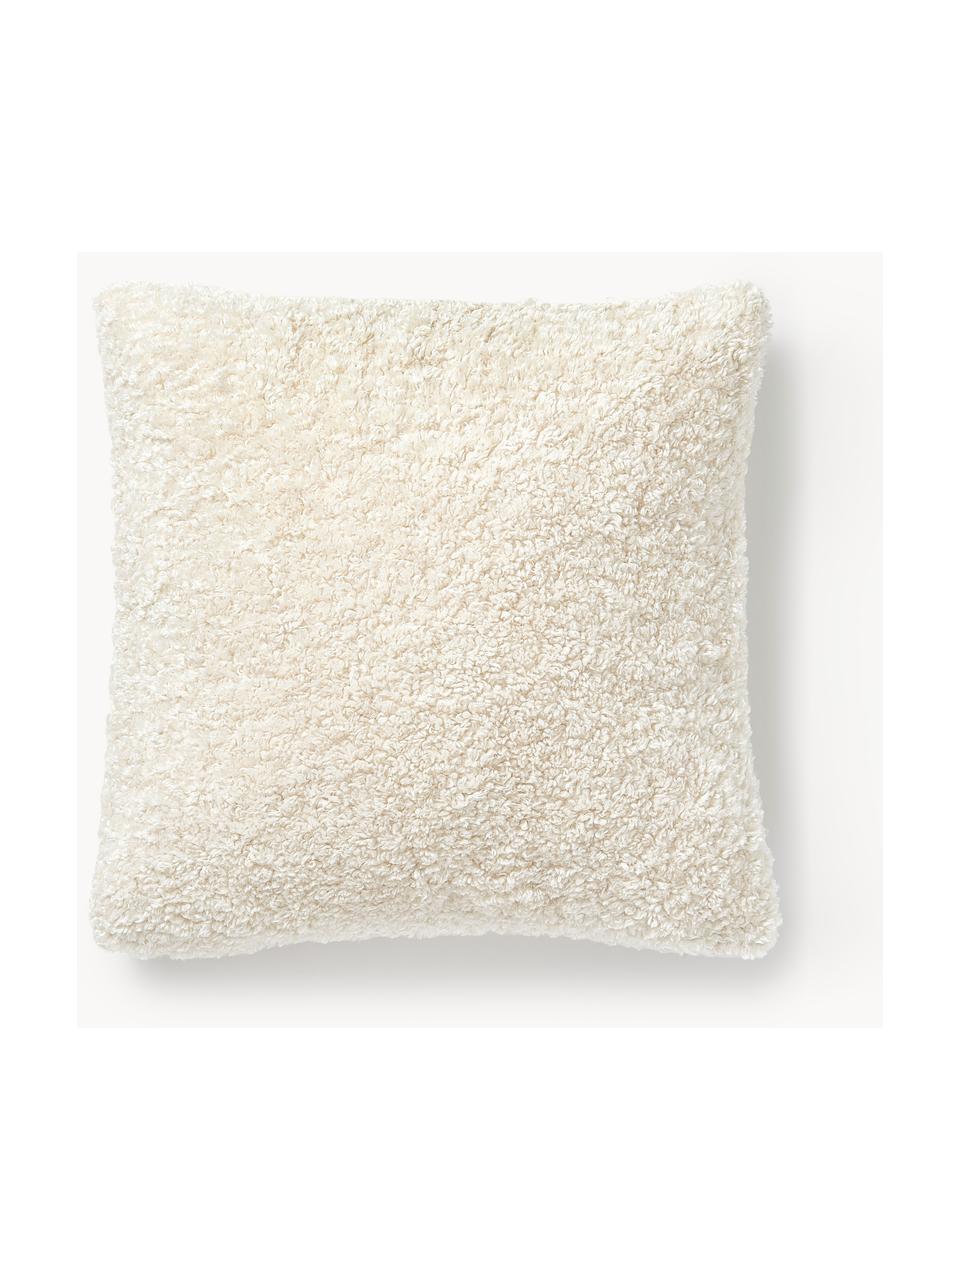 Copricuscino in teddy Dotty, 100% poliestere (teddy), Bianco crema, Larg. 45 x Lung. 45 cm